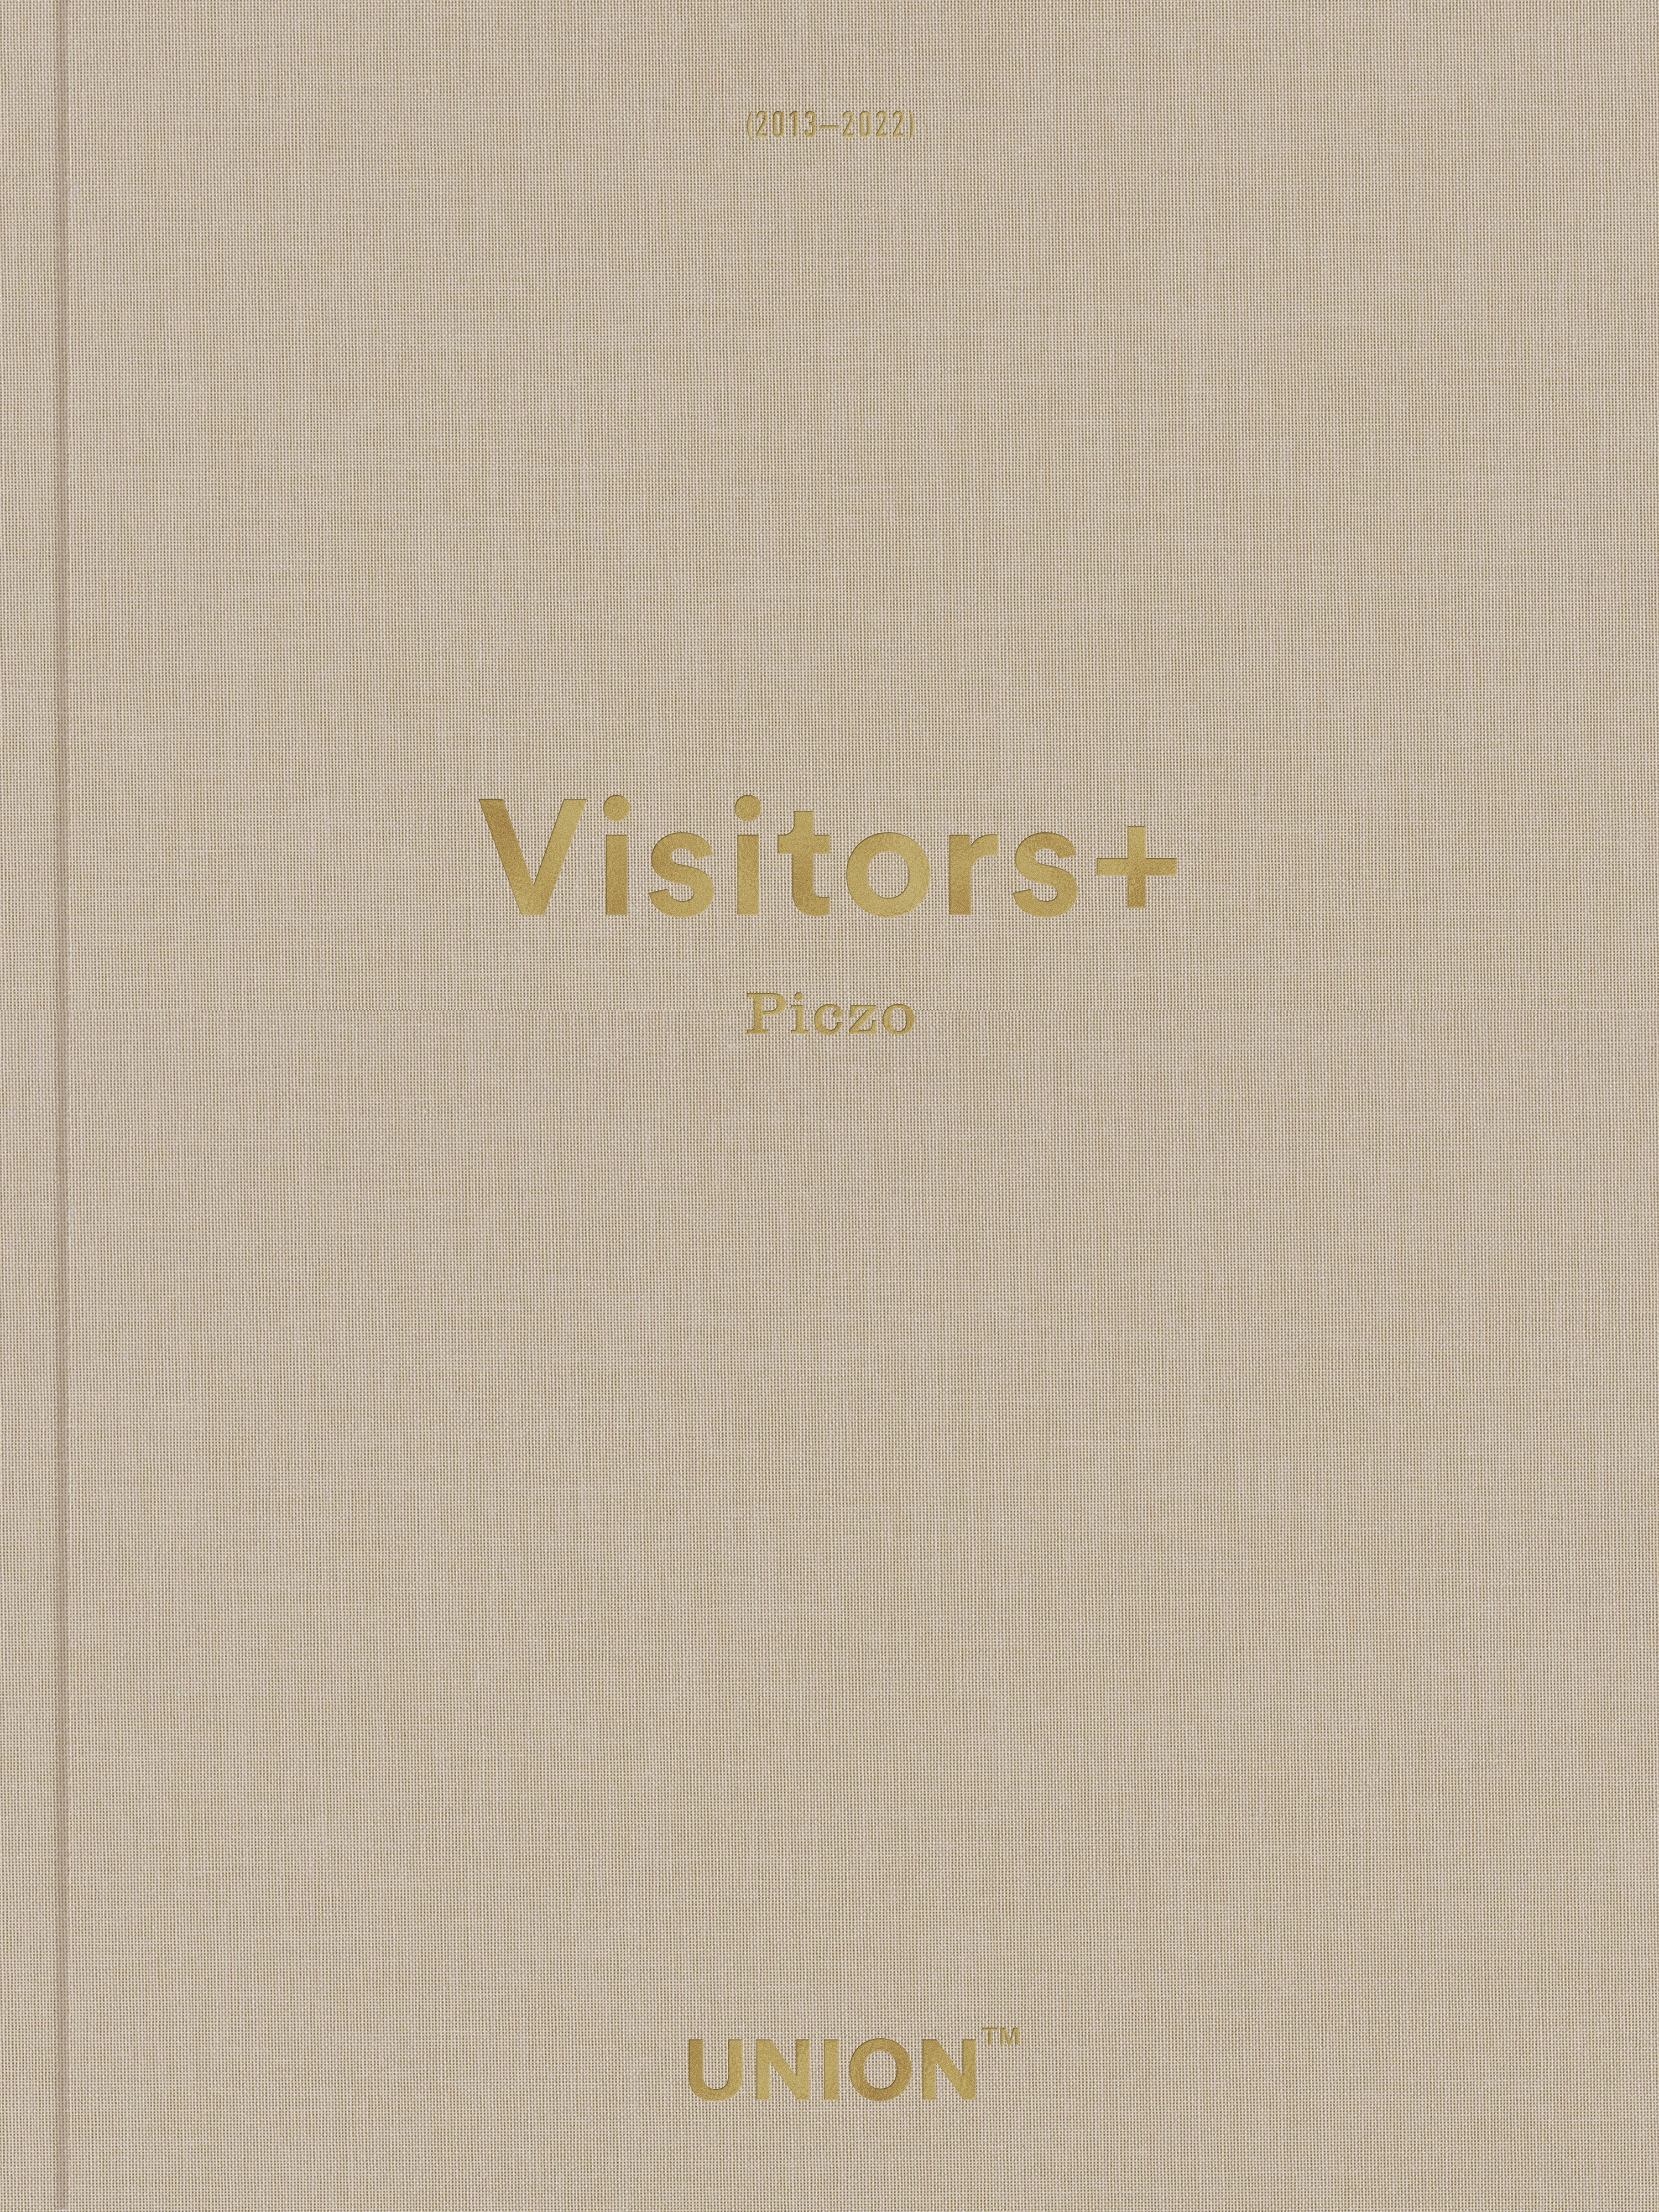 visitors-cover-frontL.jpg